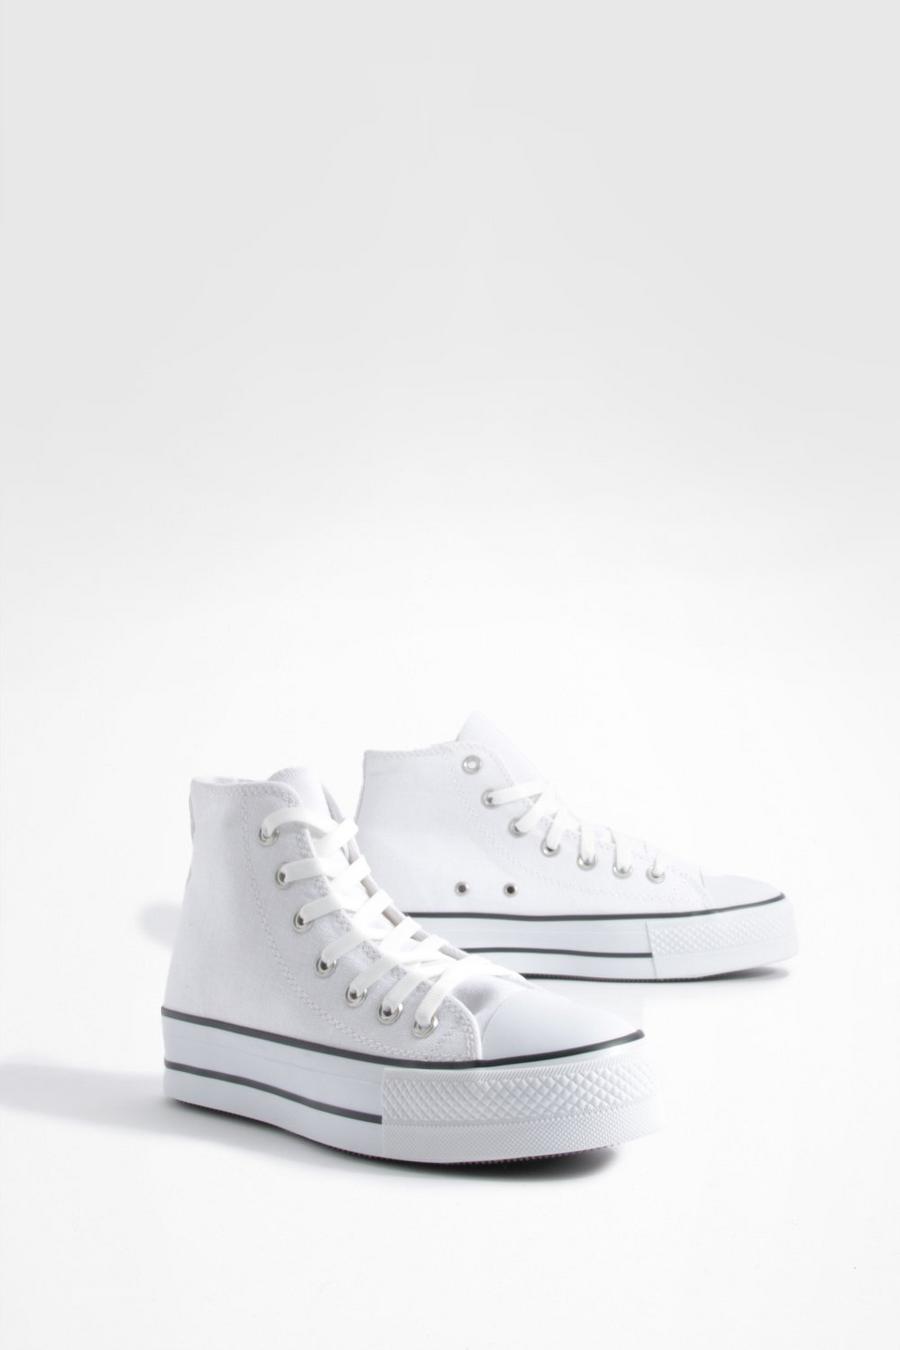 Klobige Canvas High-Top Sneaker, White